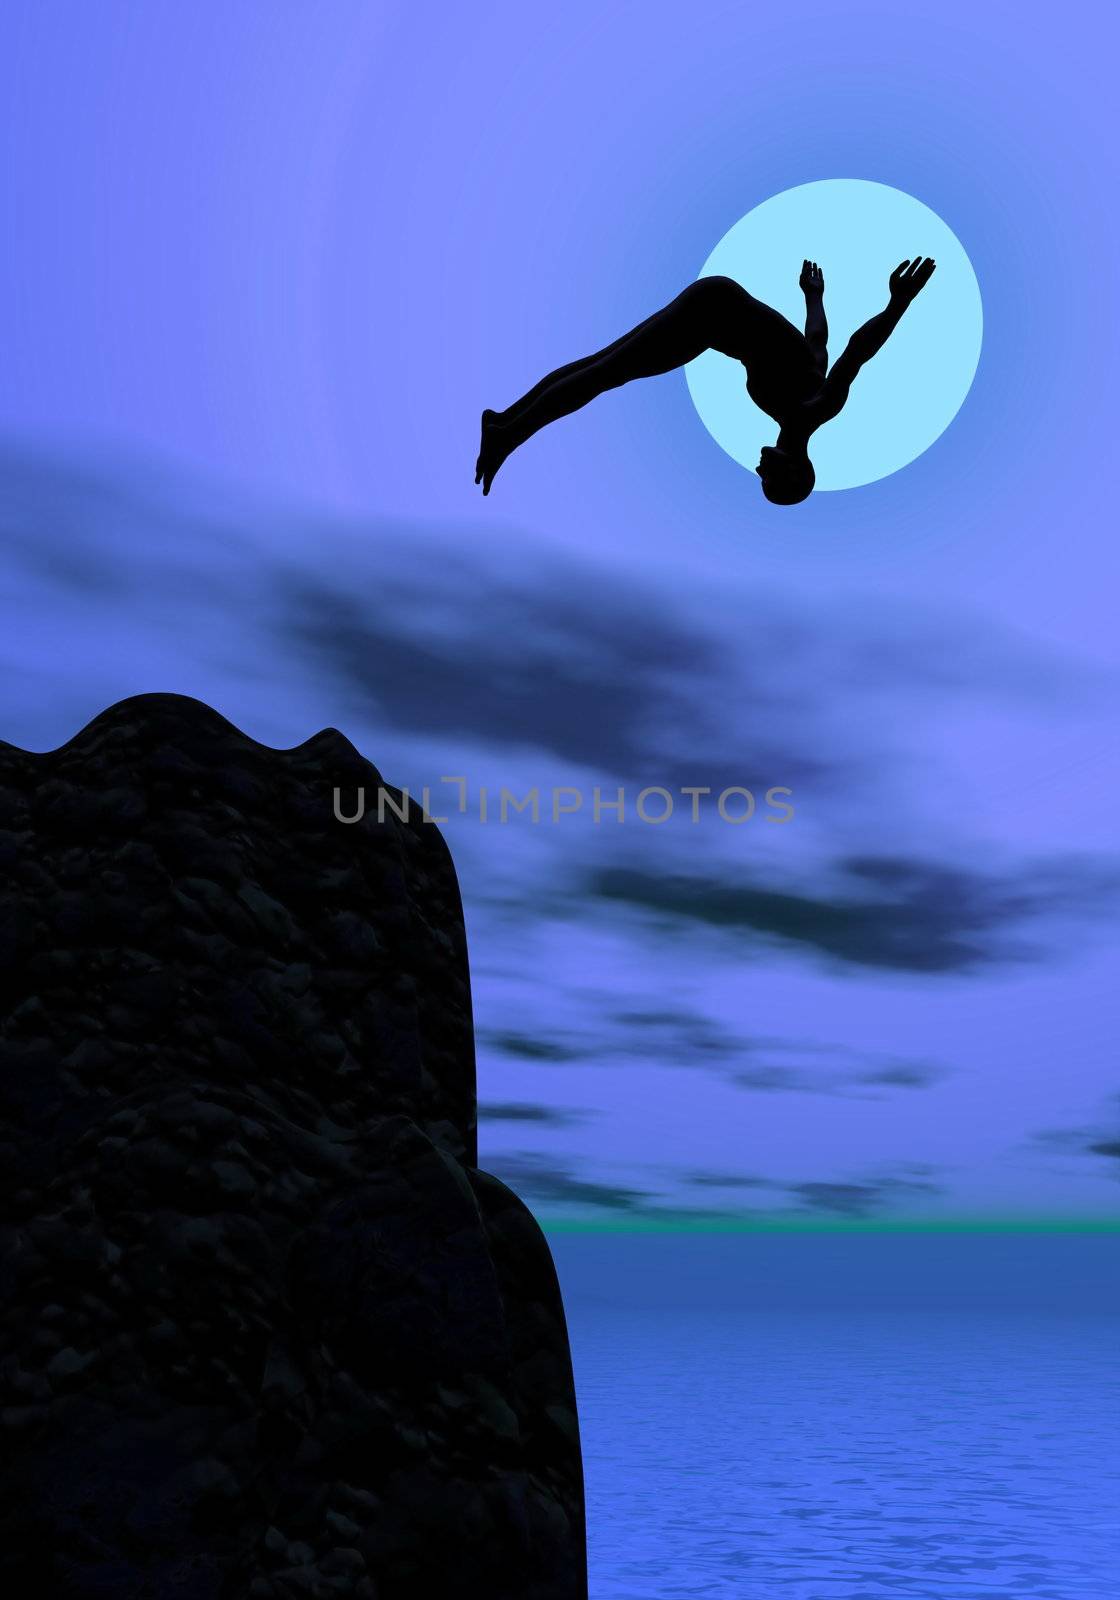 Moonlight diving - 3D render by Elenaphotos21